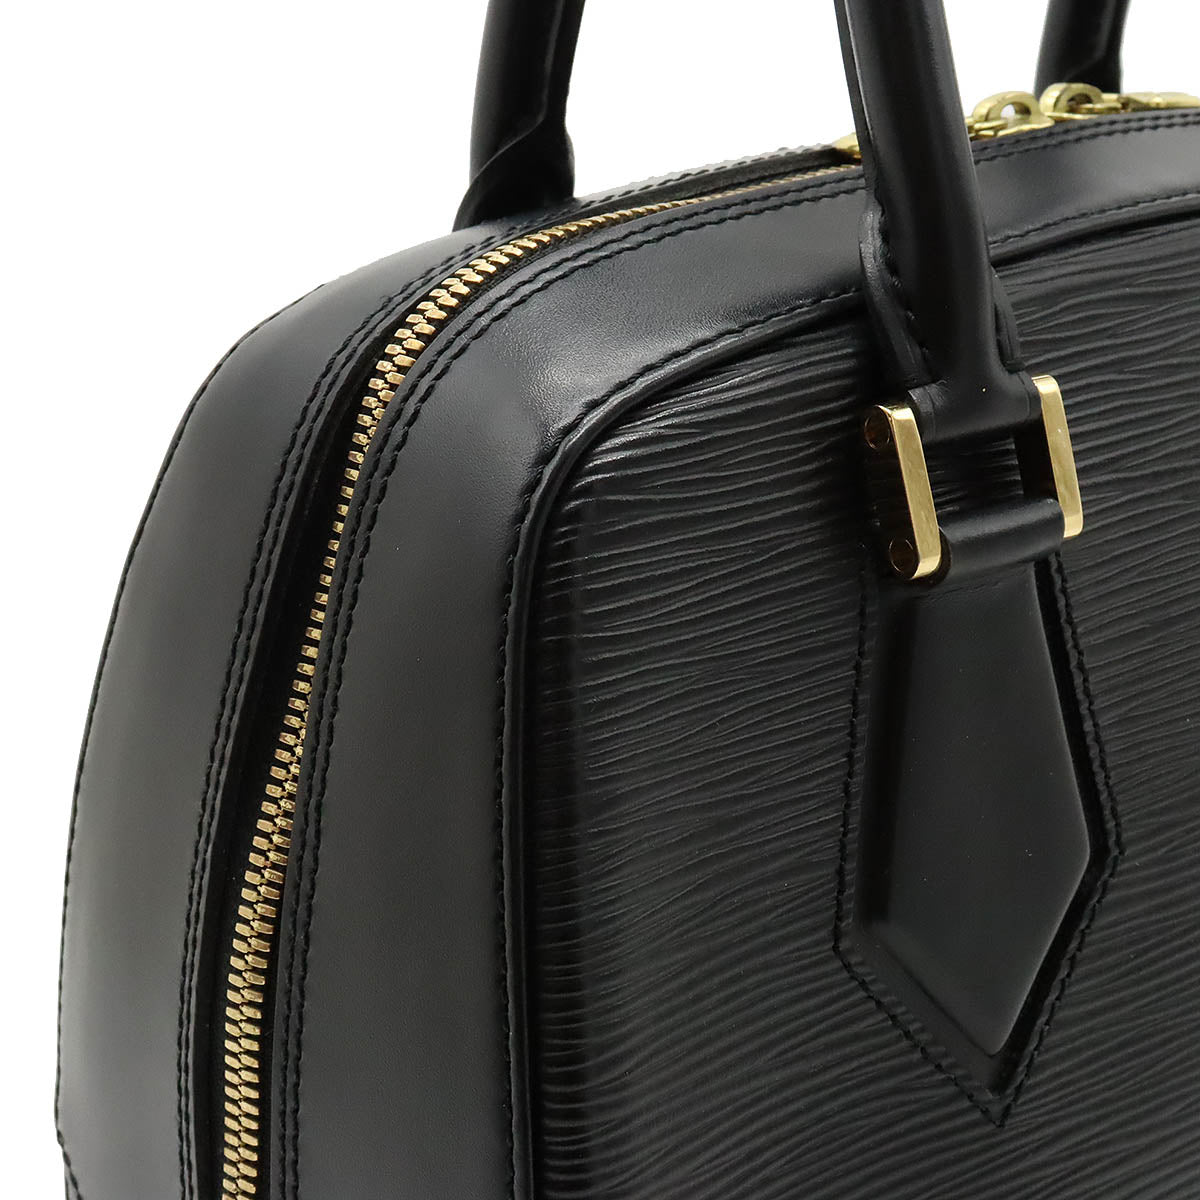 Louis Vuitton Wallet  Louis Vuitton Sablons handbag in black epi